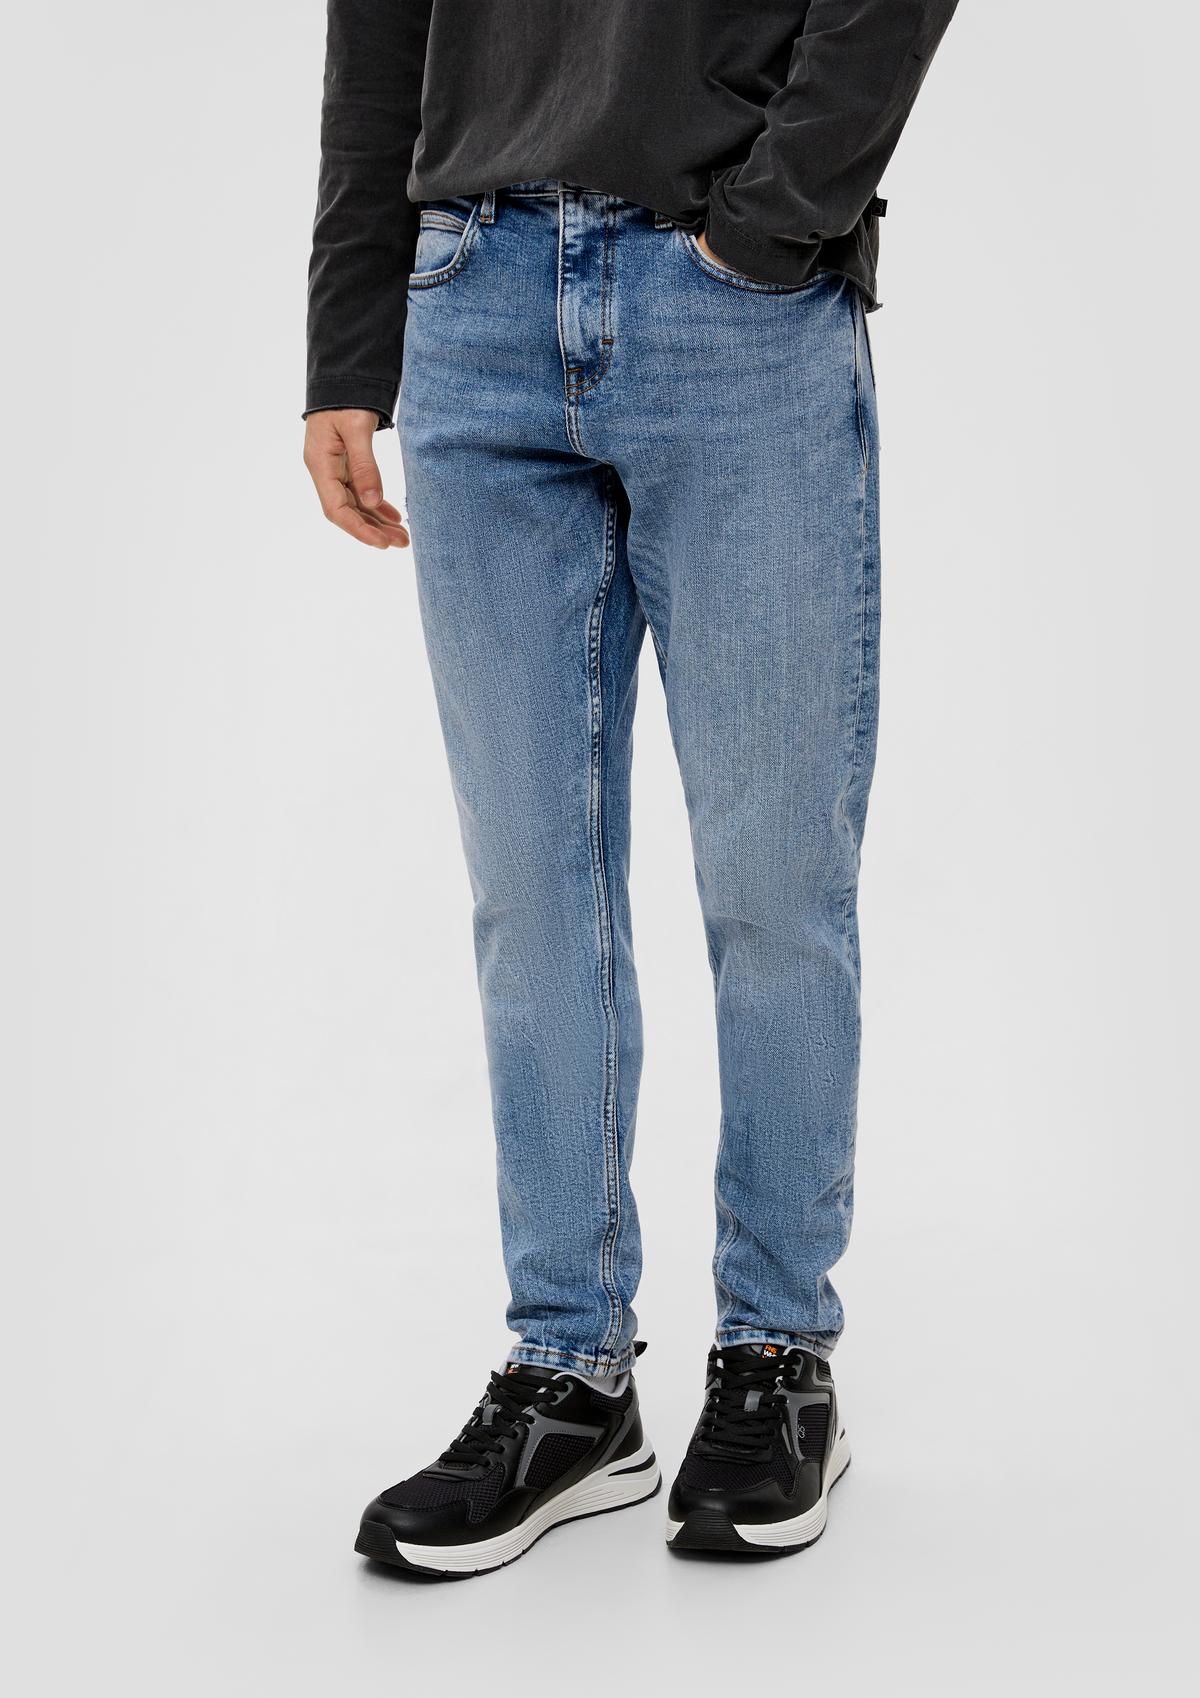 s.Oliver Jeans Shawn / regular fit / mid rise / slim leg